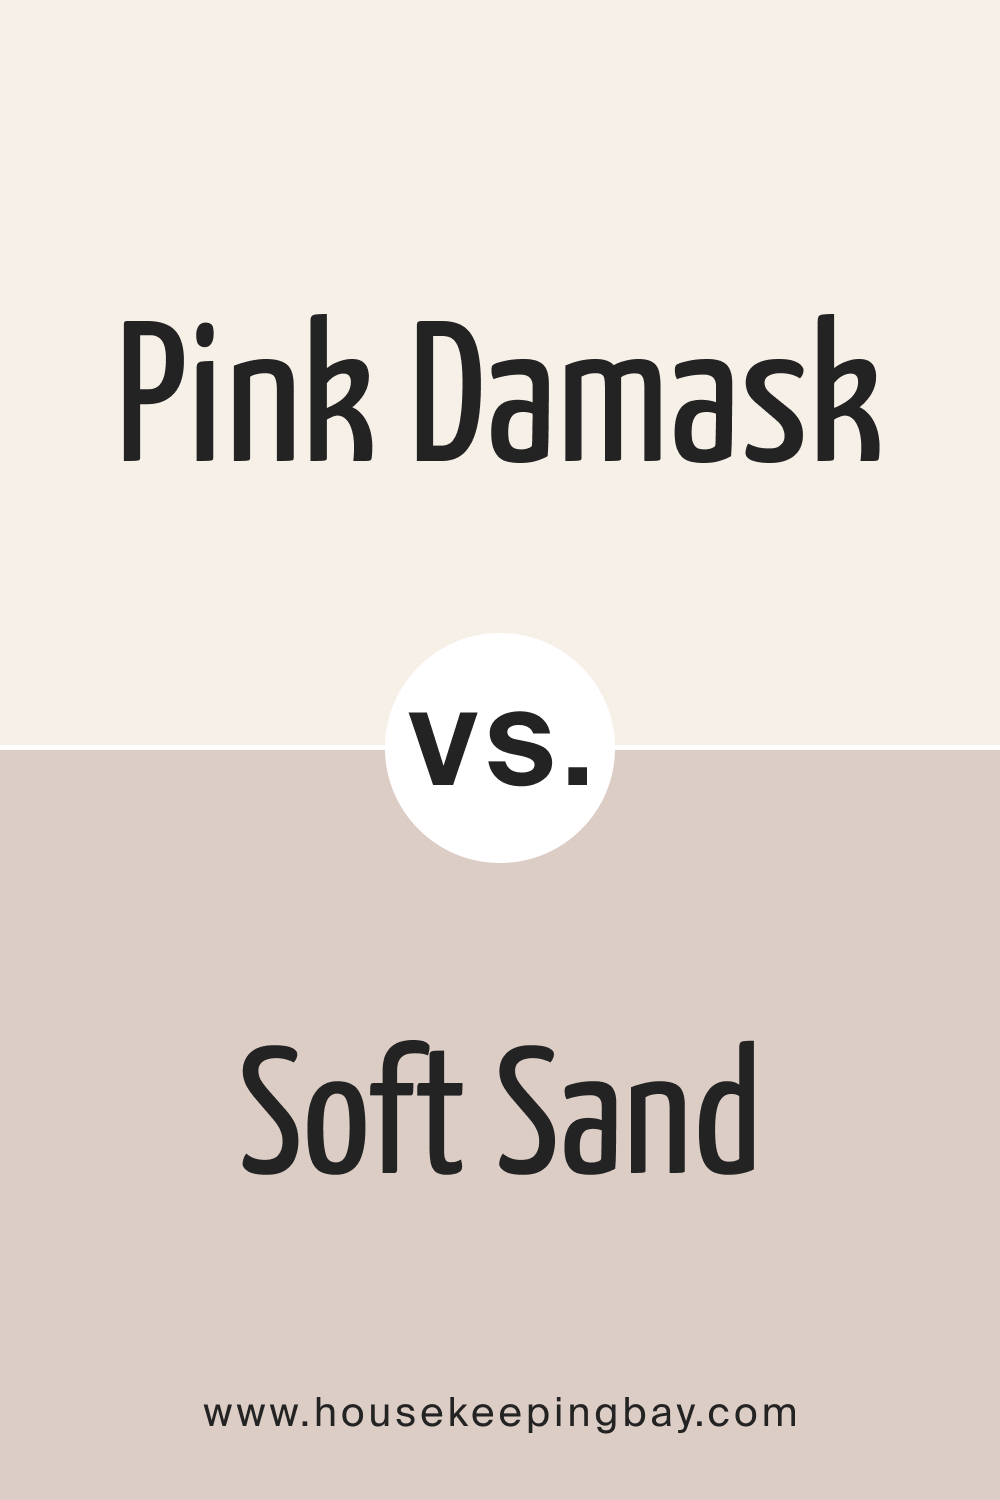 Pink Damask OC 72 vs BM Soft Sand 2106 60